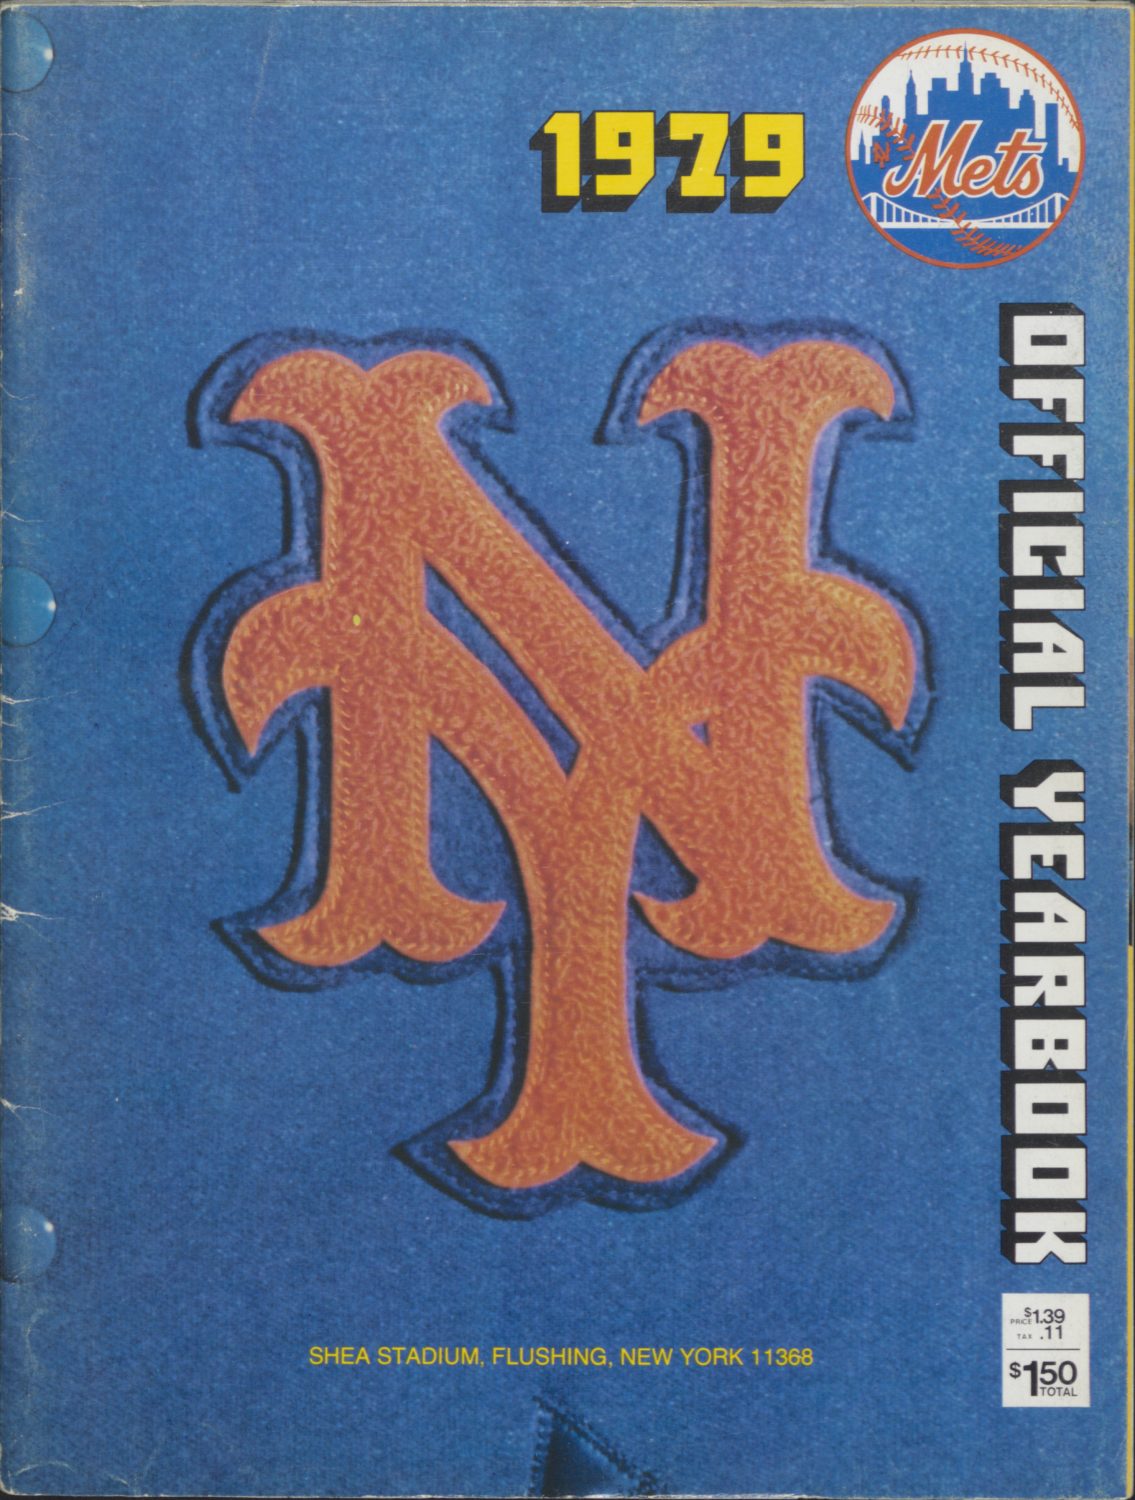 1979 Mets Yearbook: Rebuilding